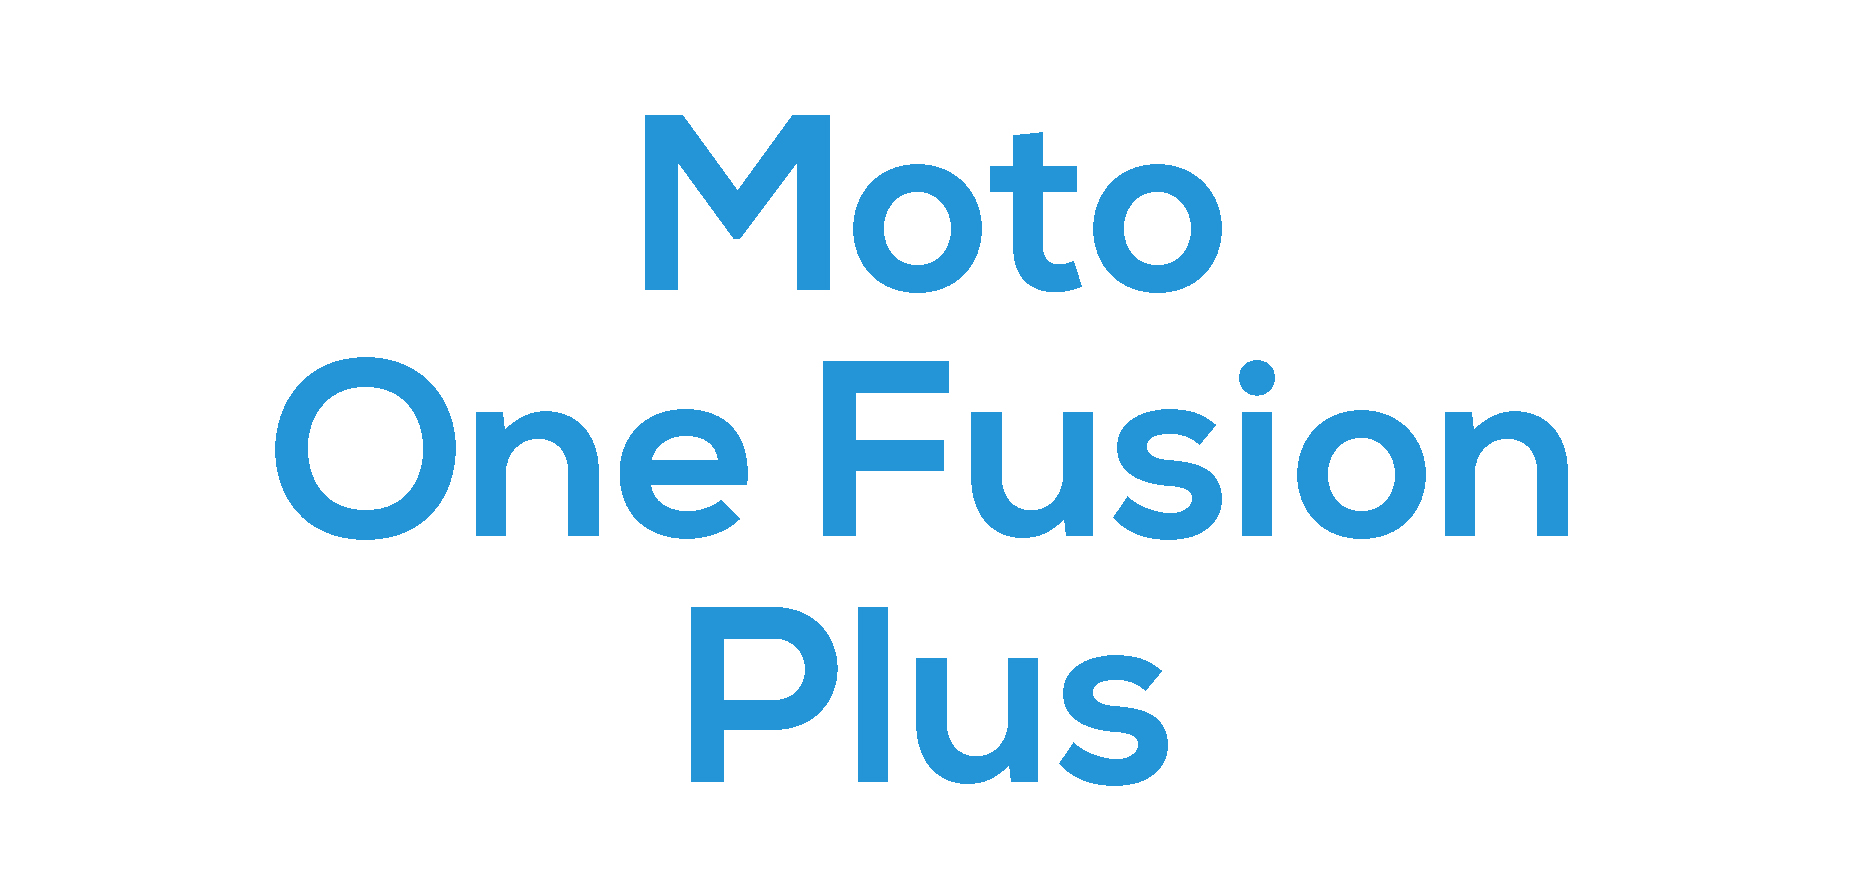 One Fusion Plus 2020 (XT2067)